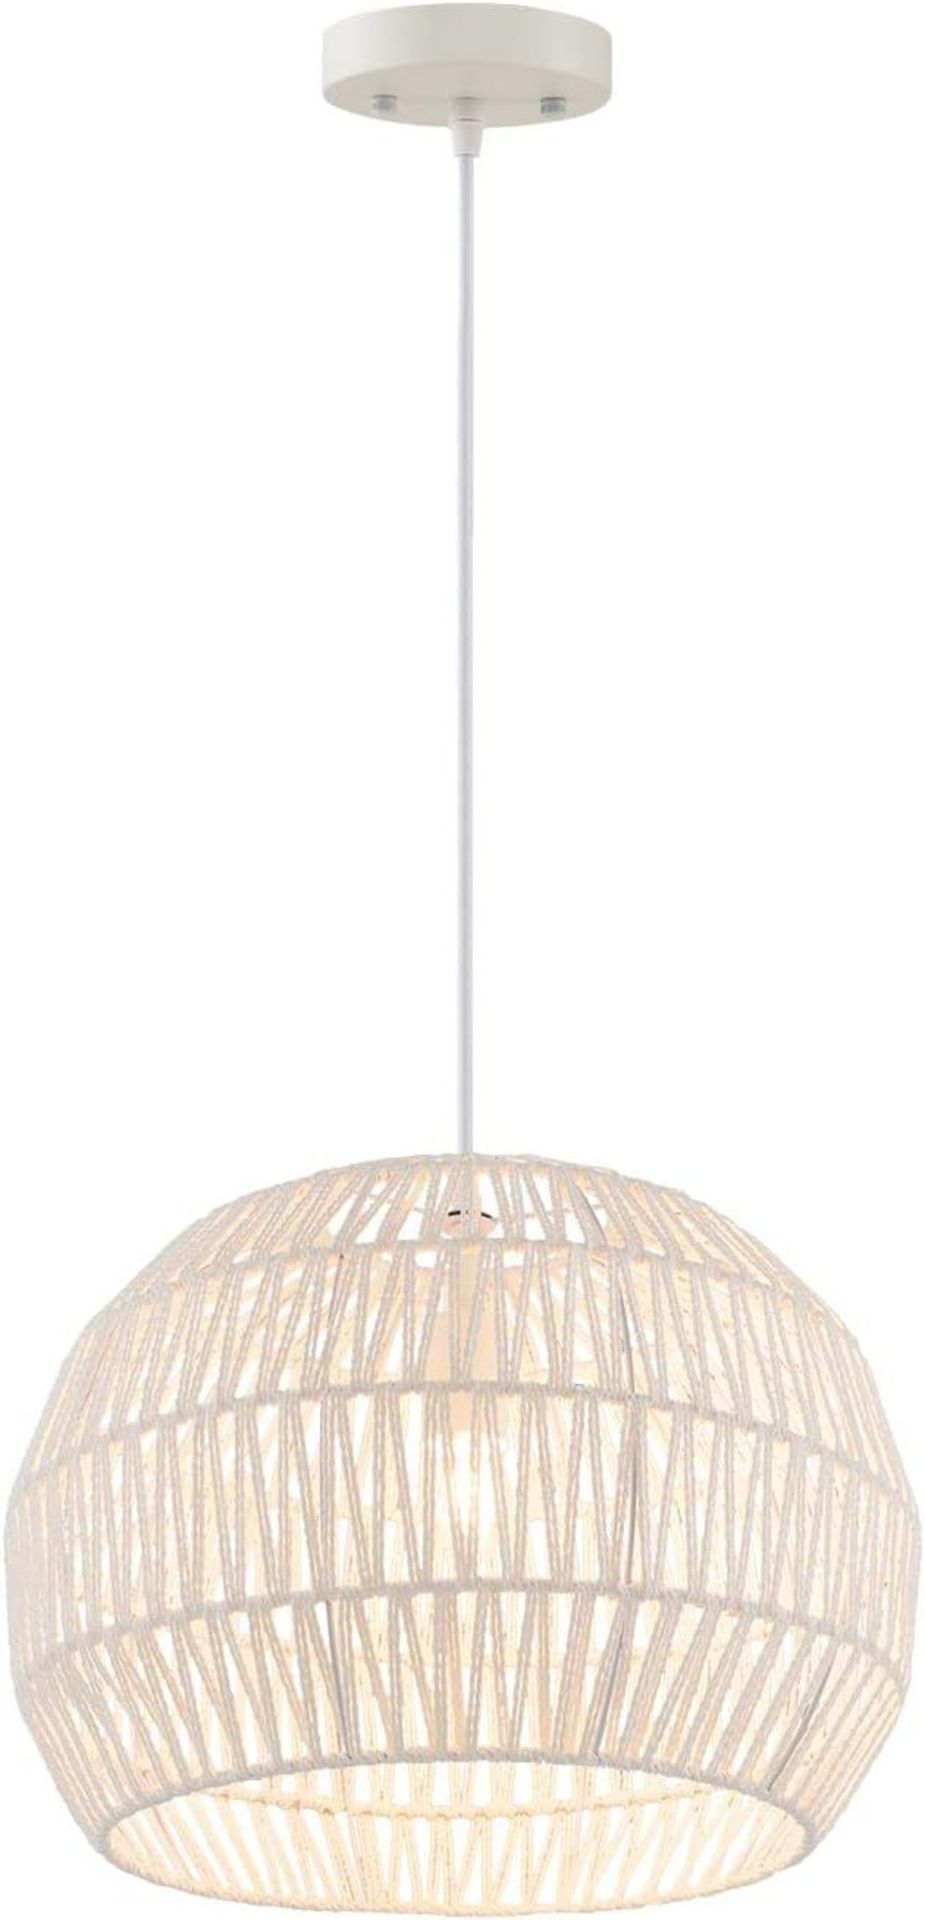 Luxury Retro Pendant Light Paper, Boho Lamp, Hanging Rustic, D 43 x H 34 cm, Braided Hanging Lamp